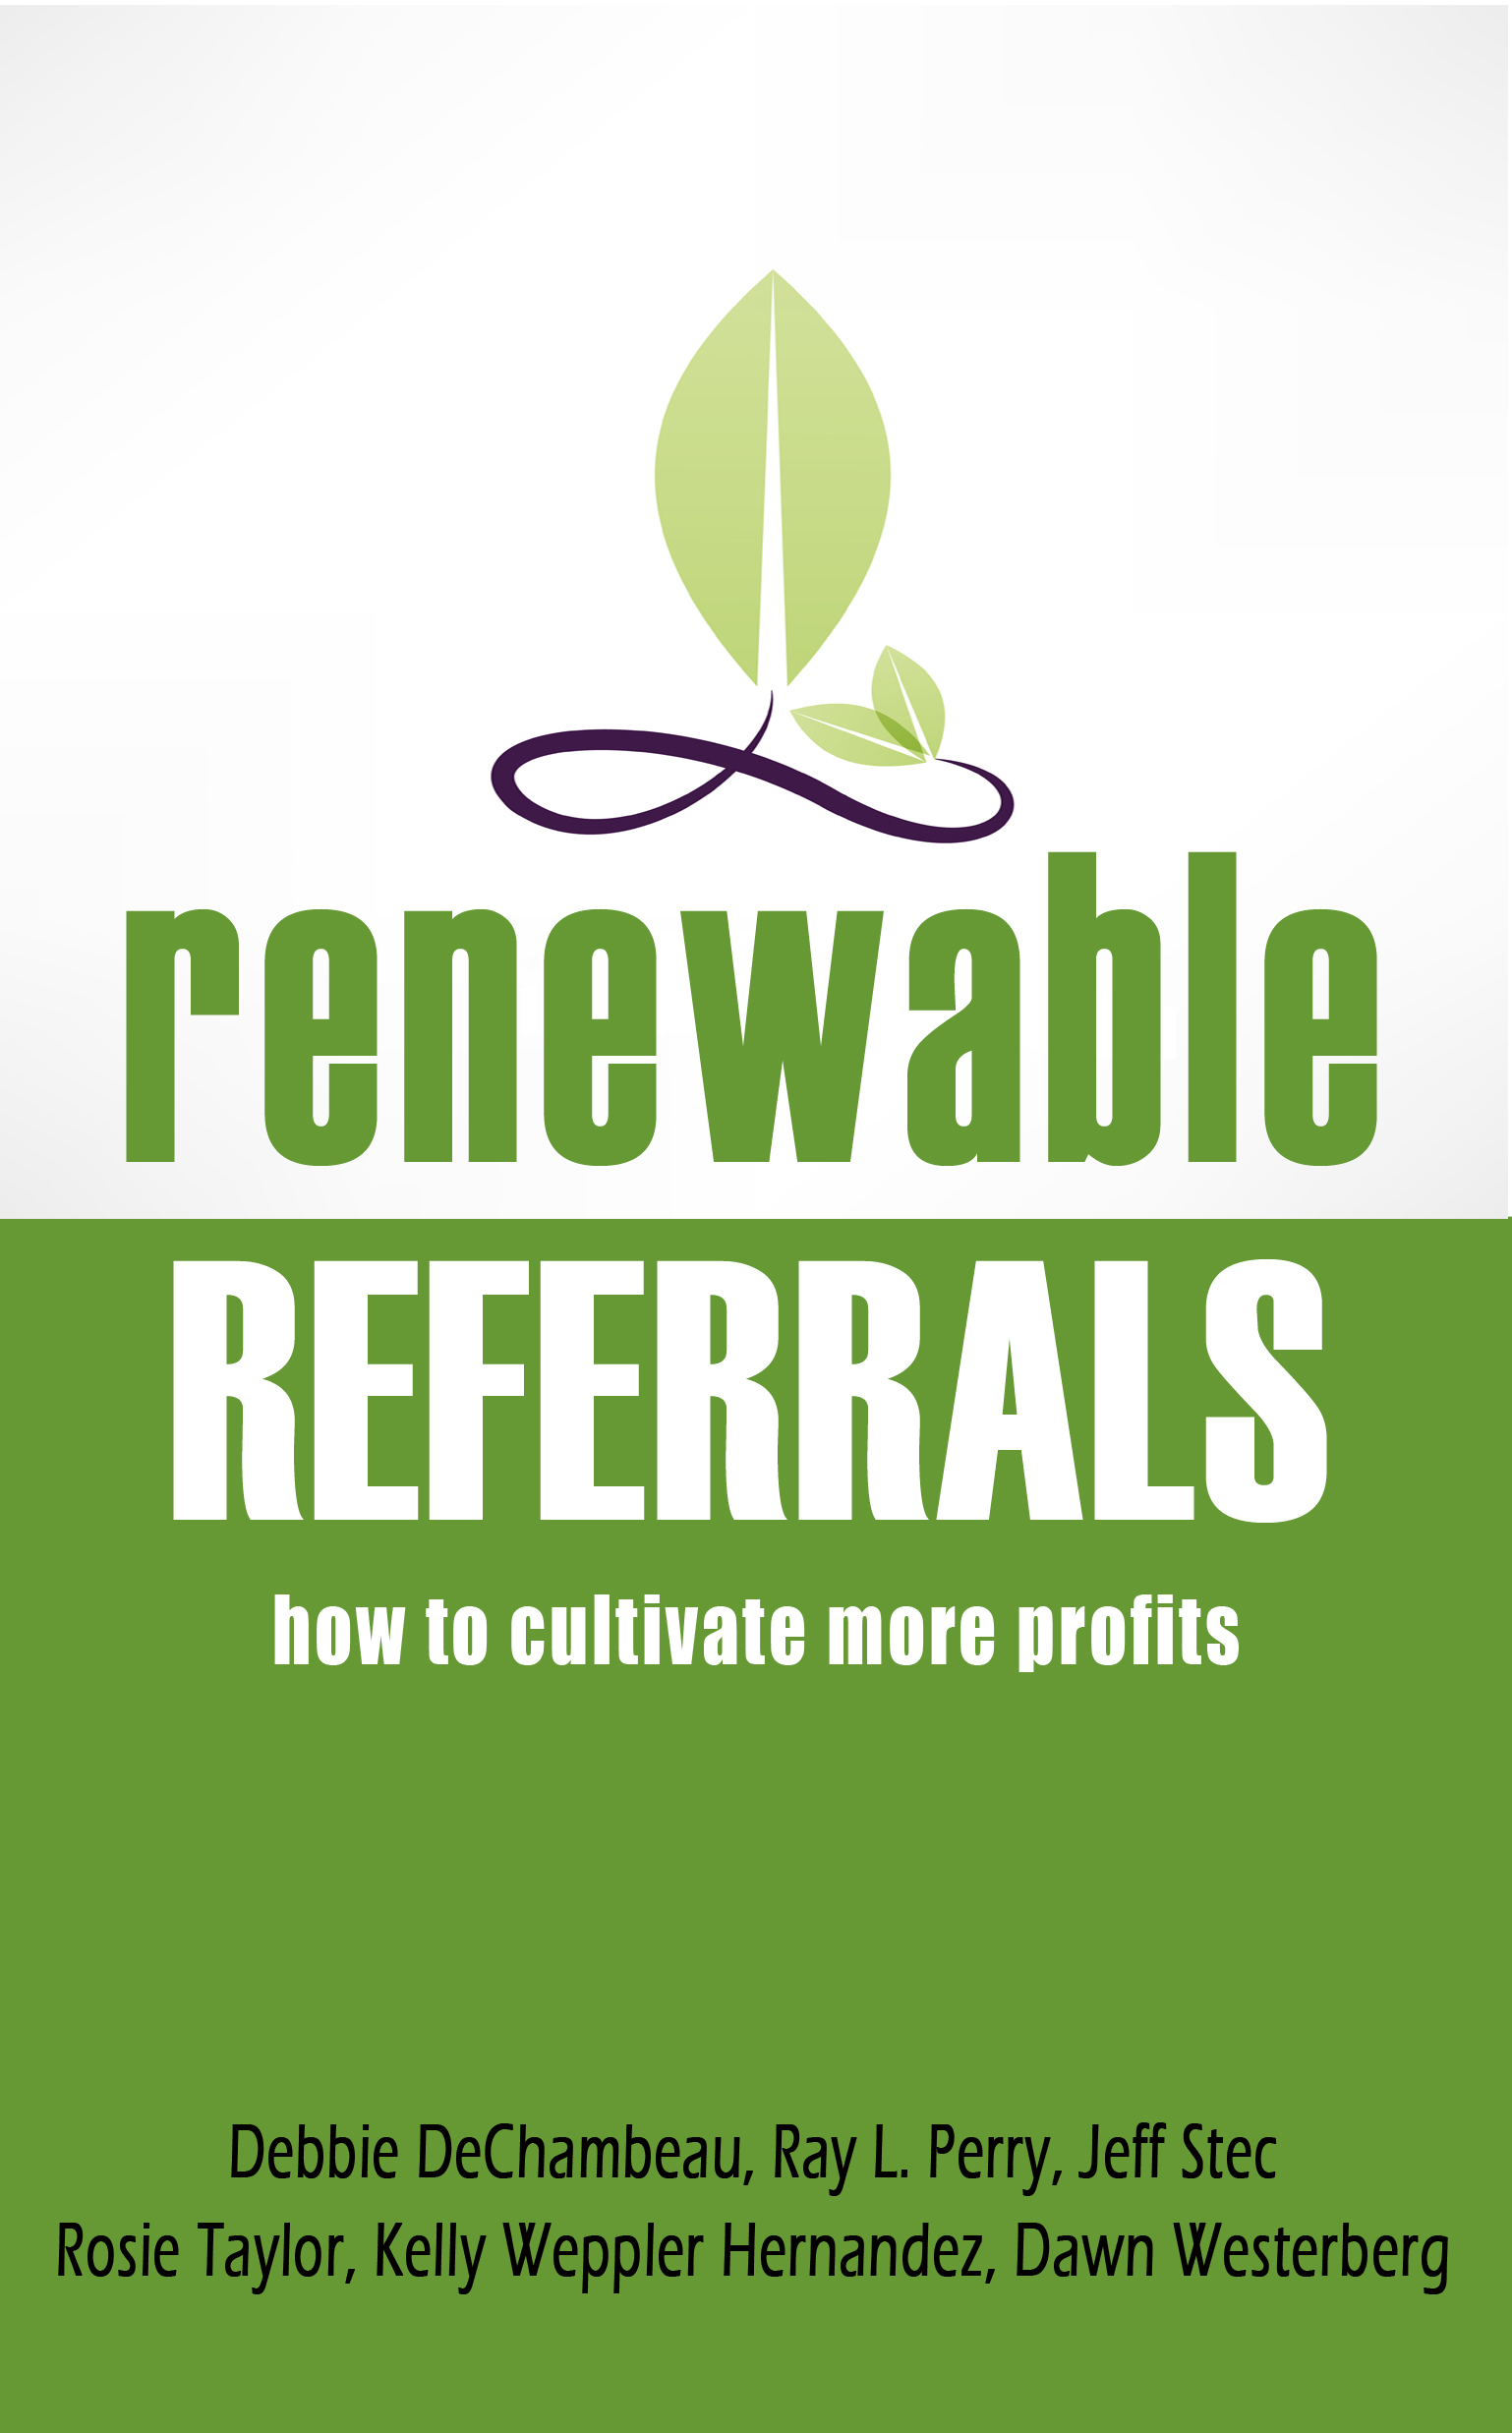 Renewable Referrals Book - Ray L Perry - Atlanta Marketing Consultant